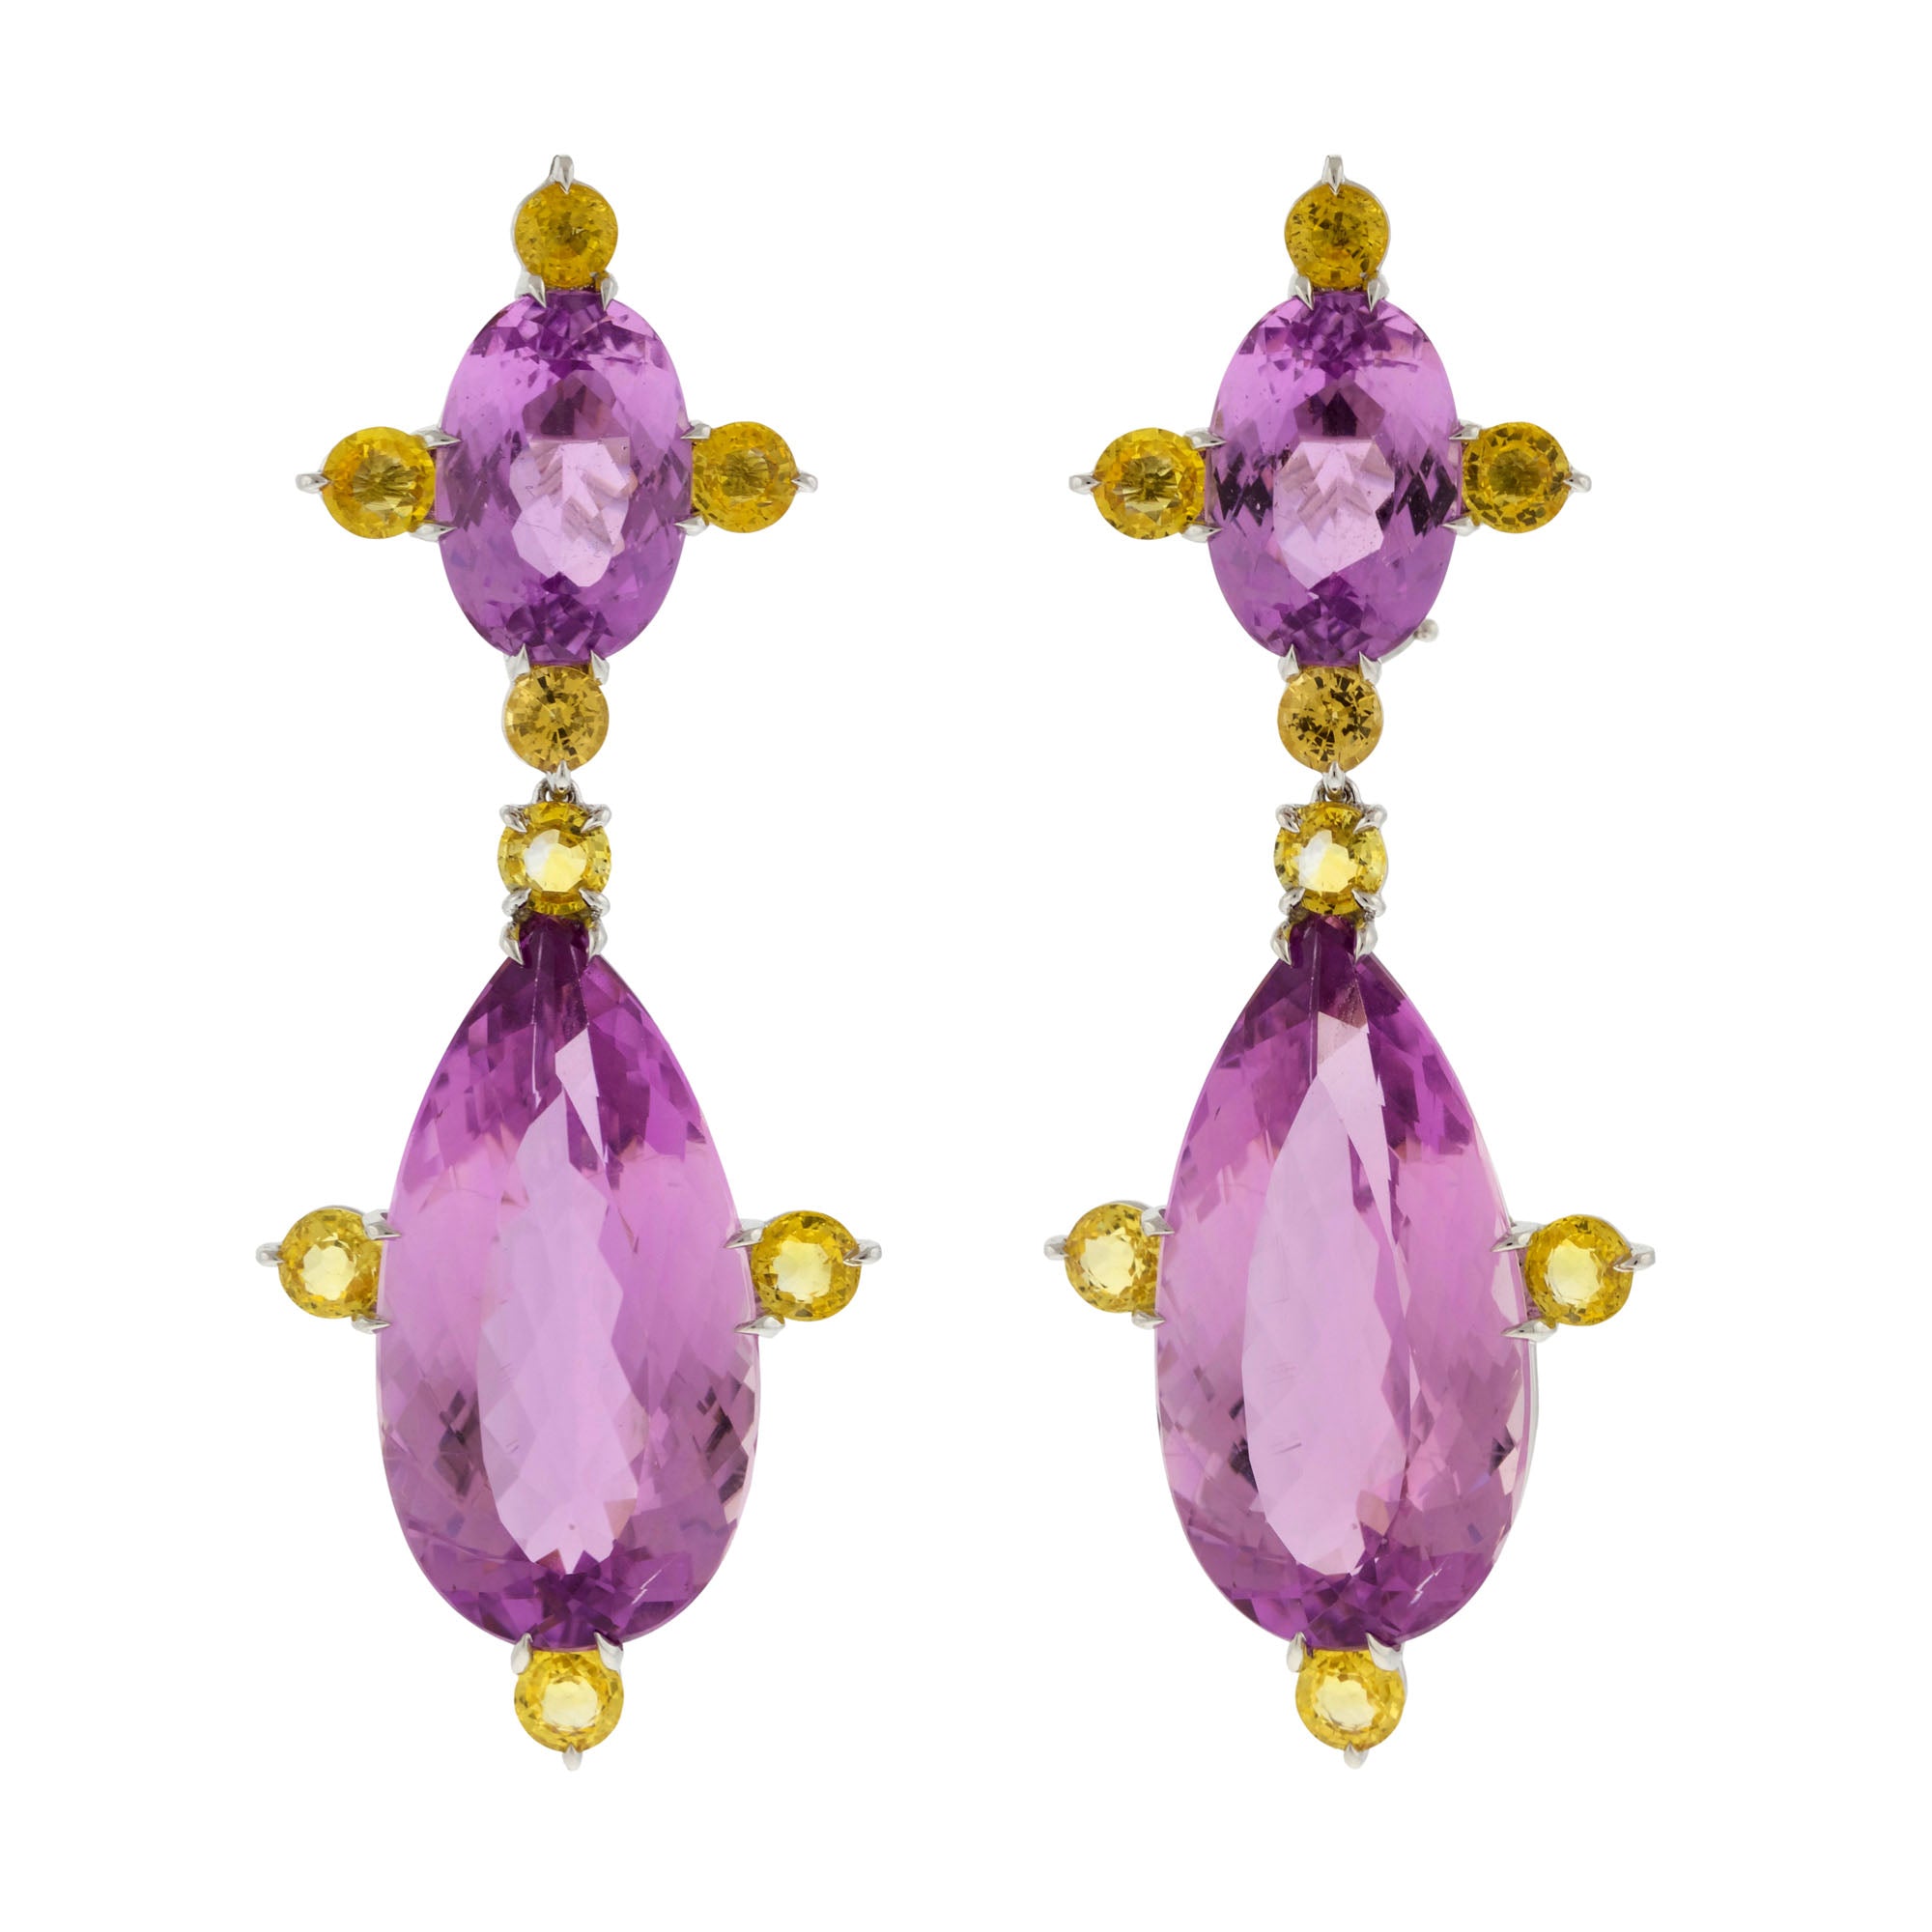 CALI X kunzite earrings – Maja DuBrul Jewelry